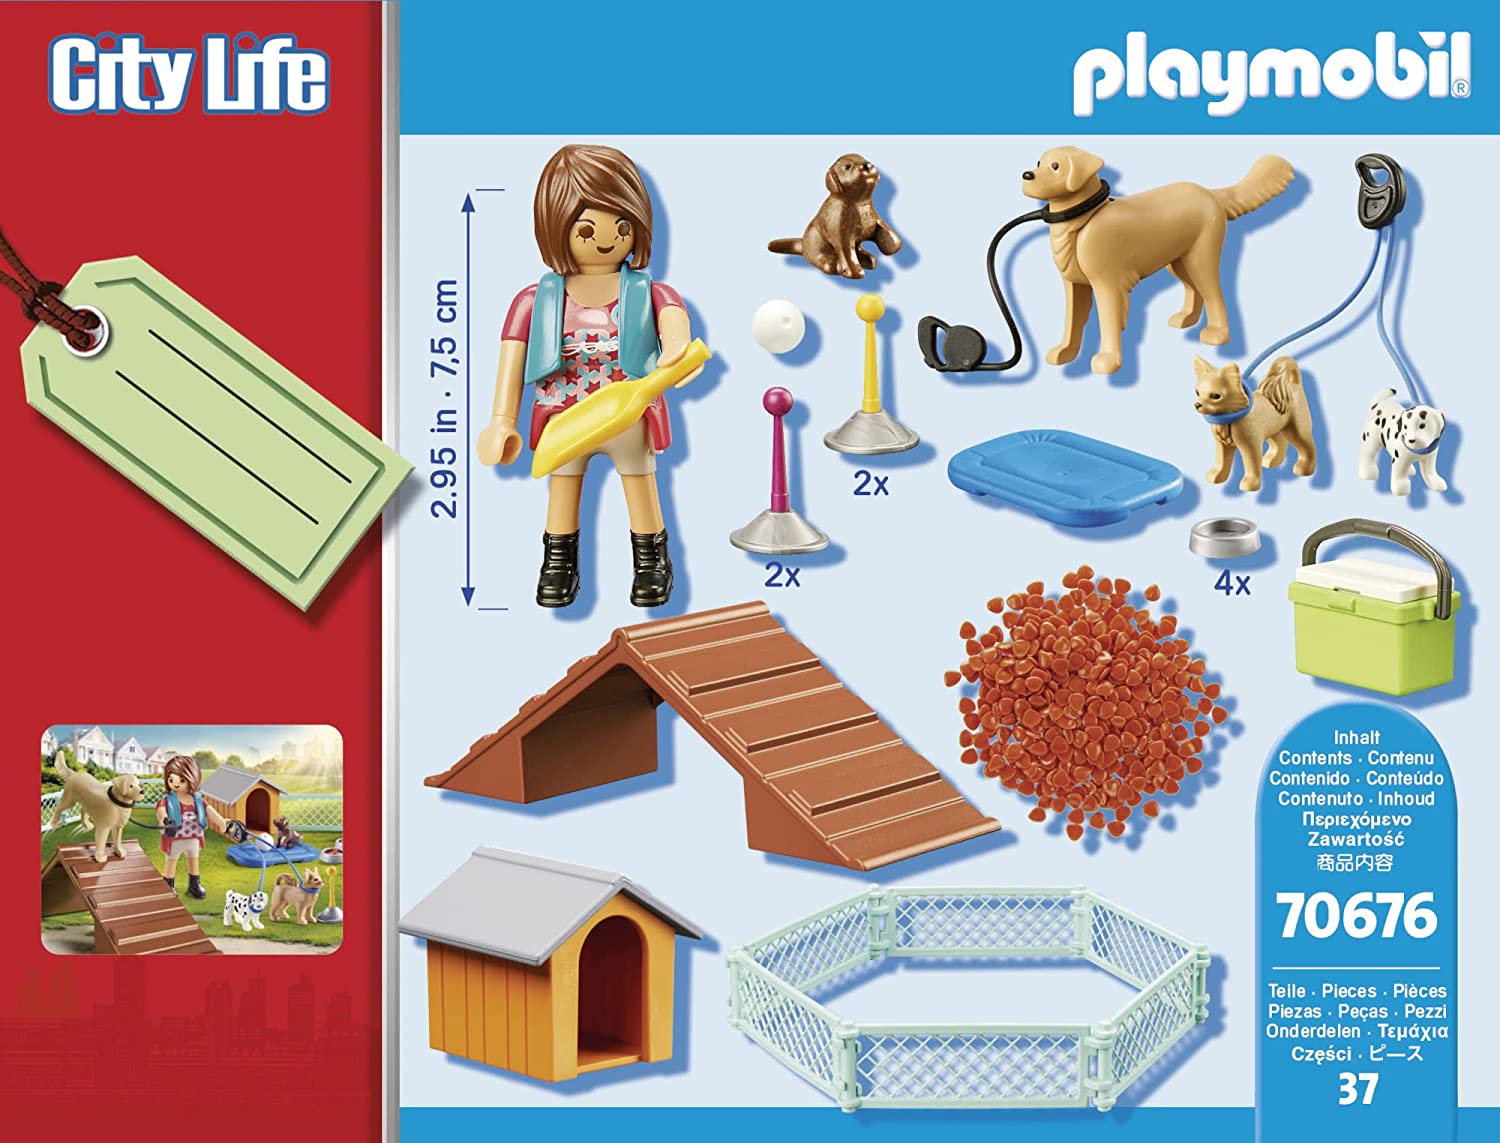 Playmobil City Life Dog Trainer Gift Set